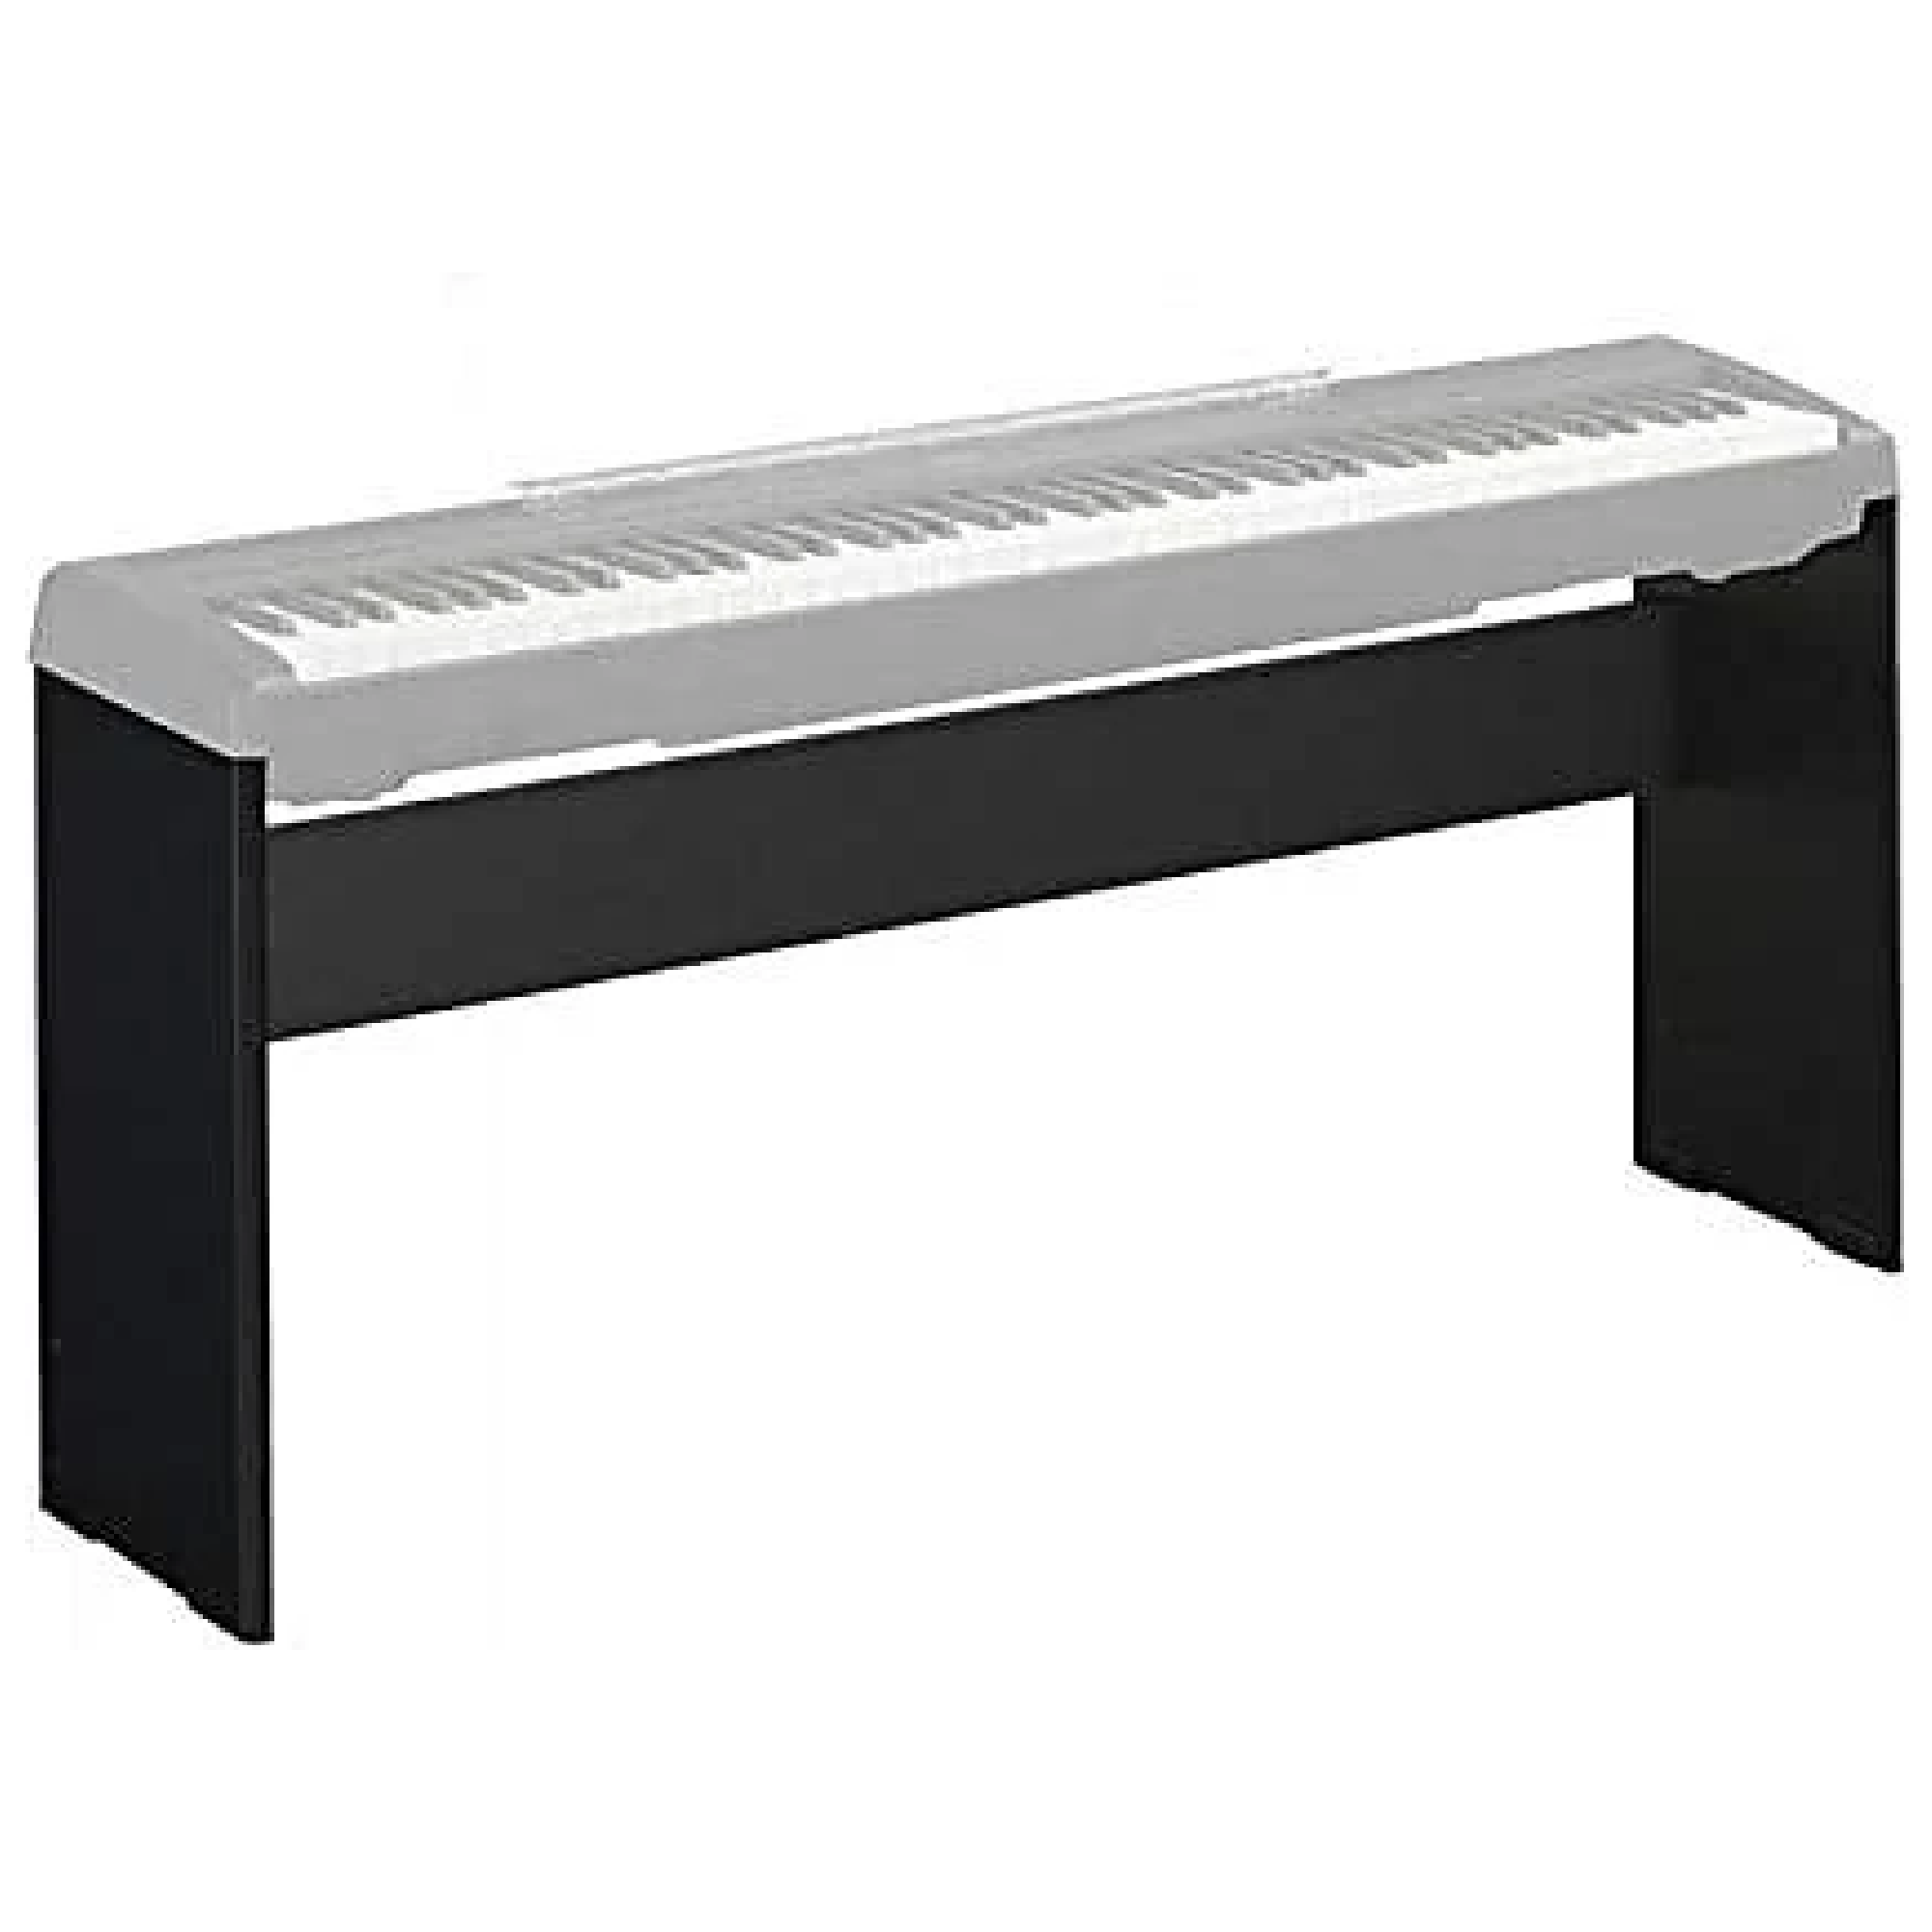 Yamaha L85 Piano Stand - Black